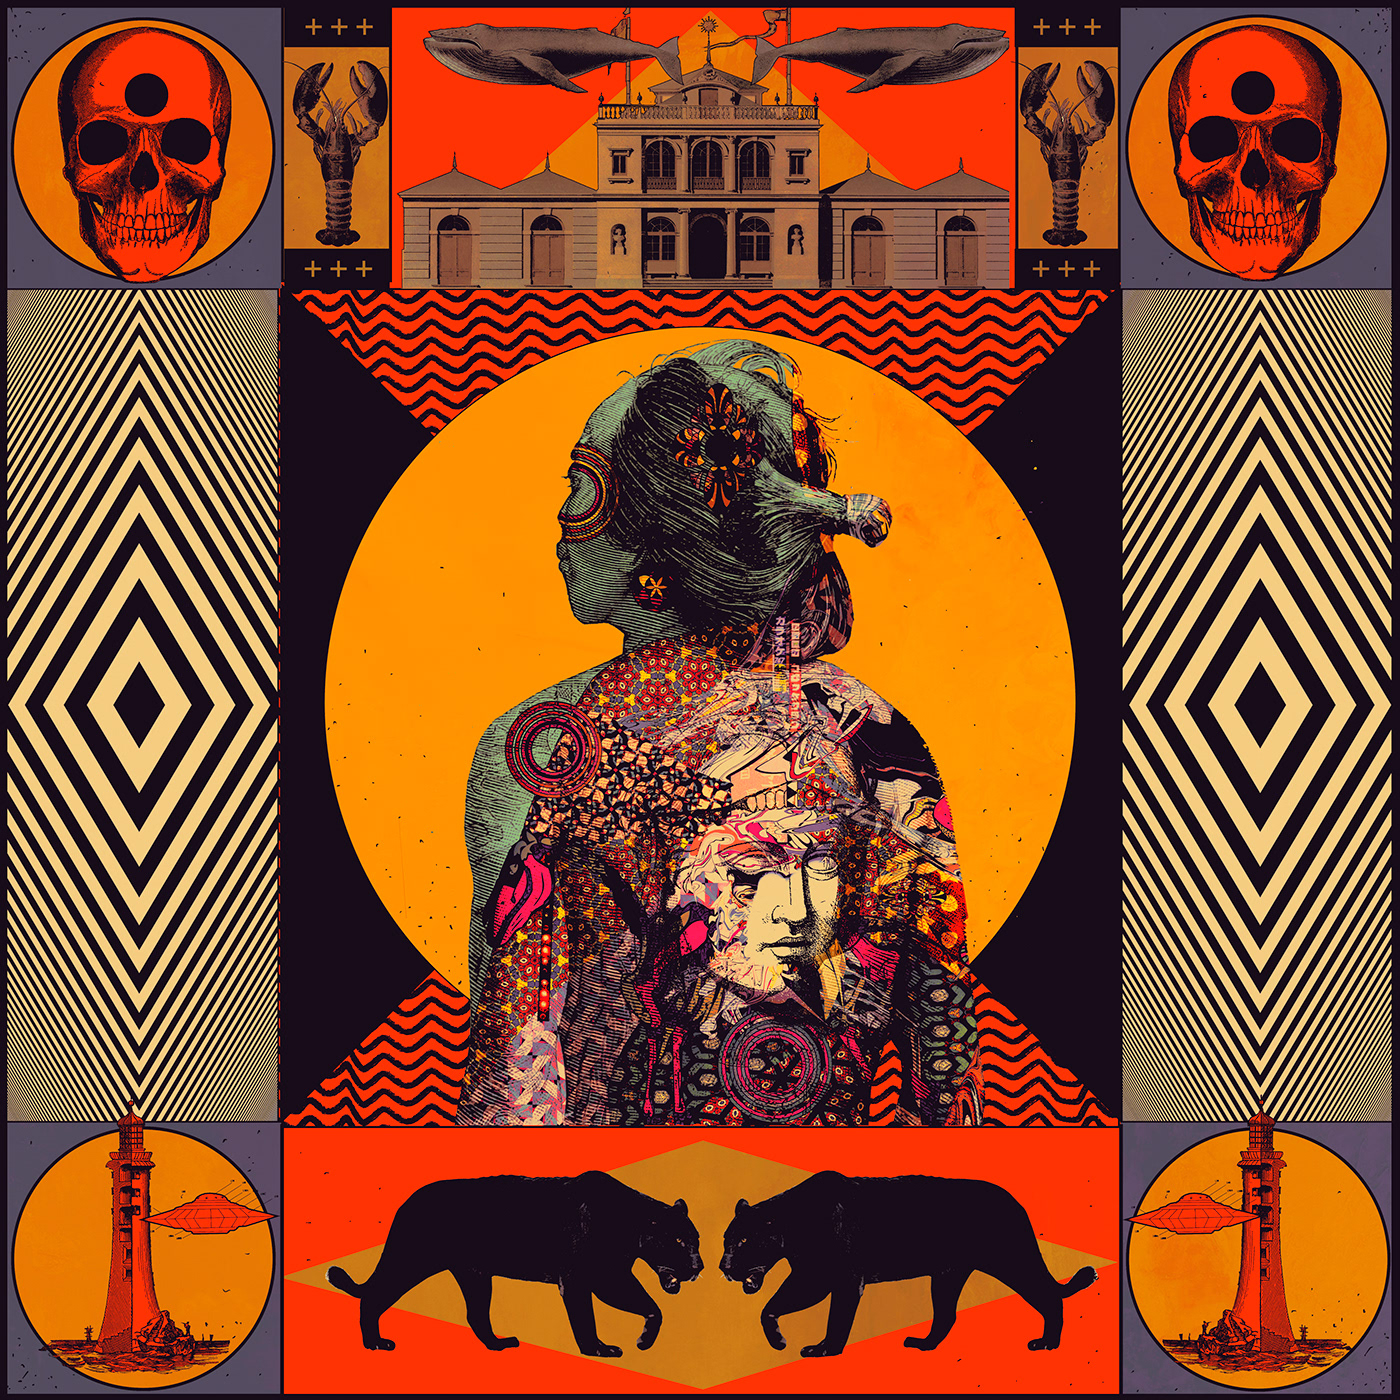 artprint poster gig posters psychedelic surreal art album covers ILLUSTRATION  pop surrealism spain